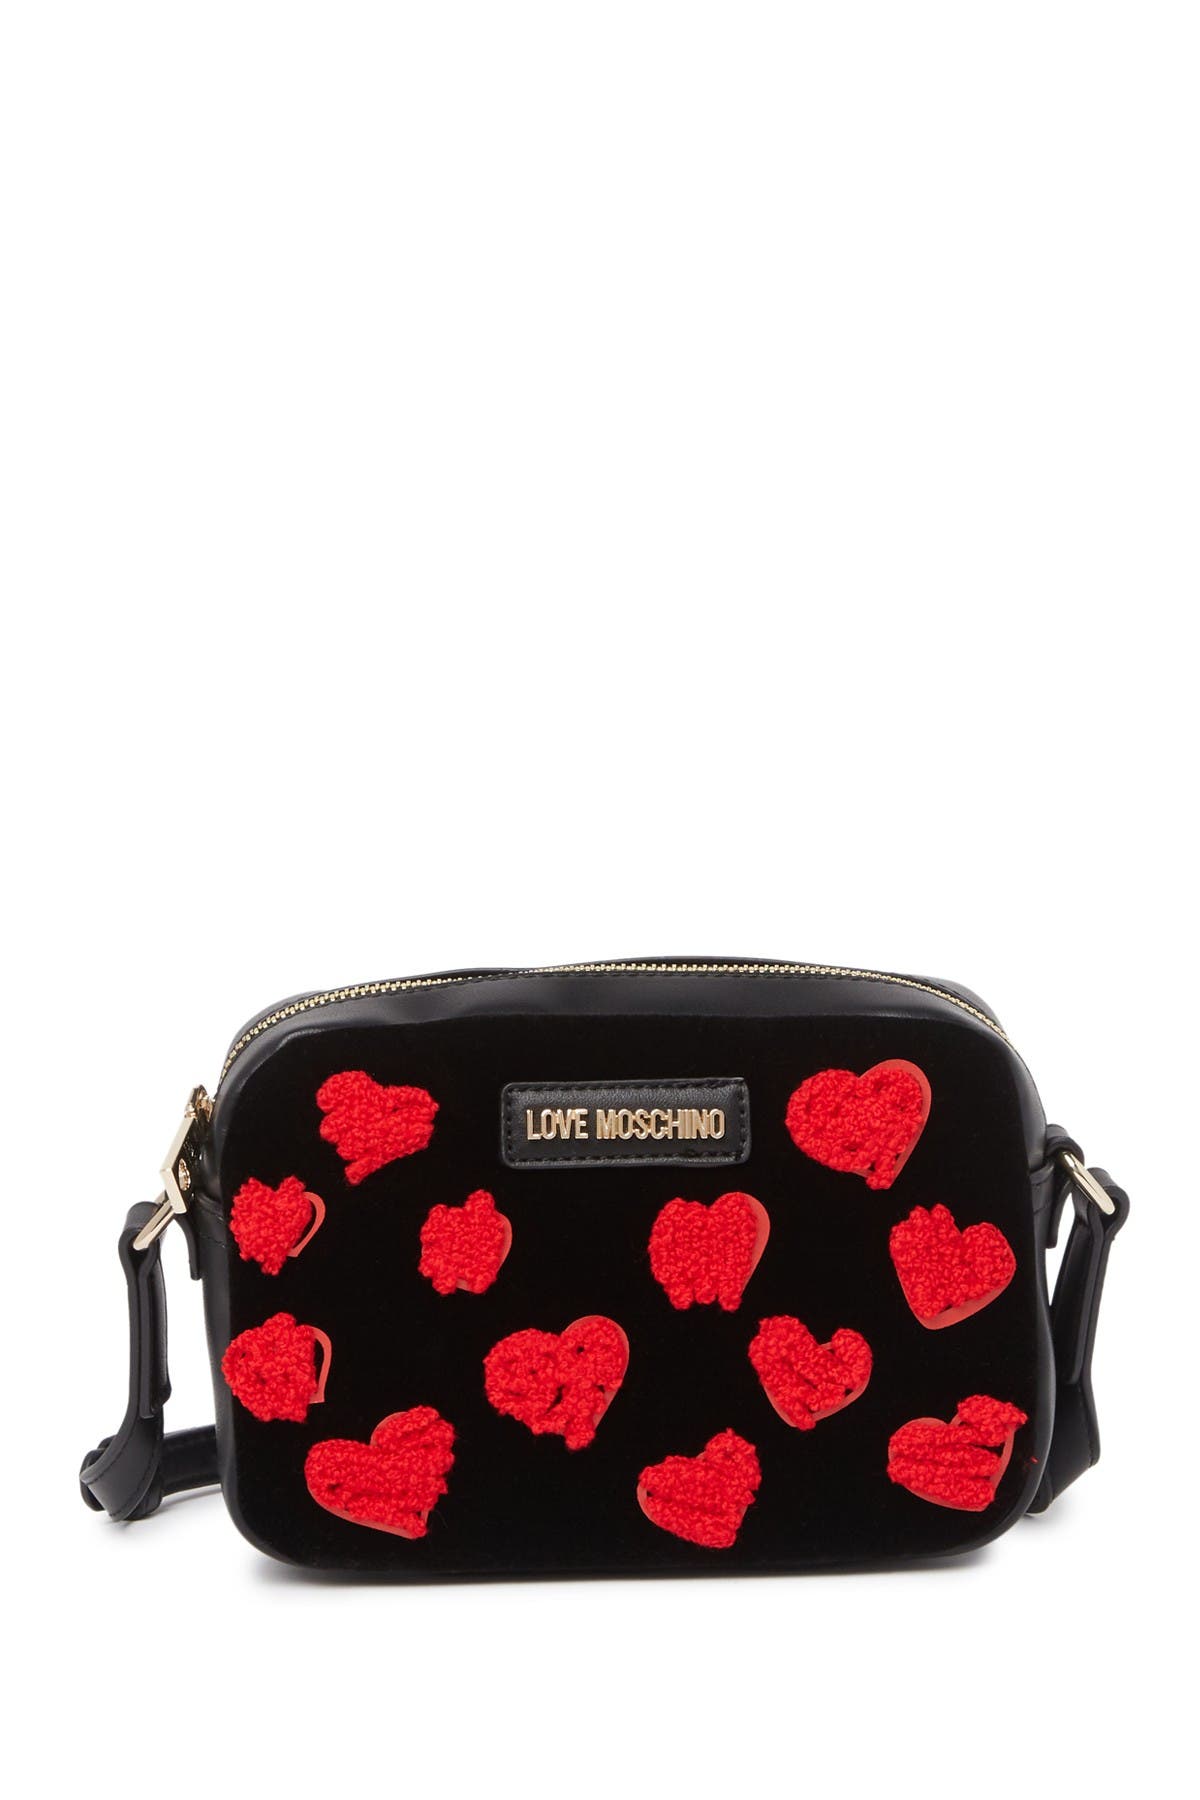 love moschino black bag red heart